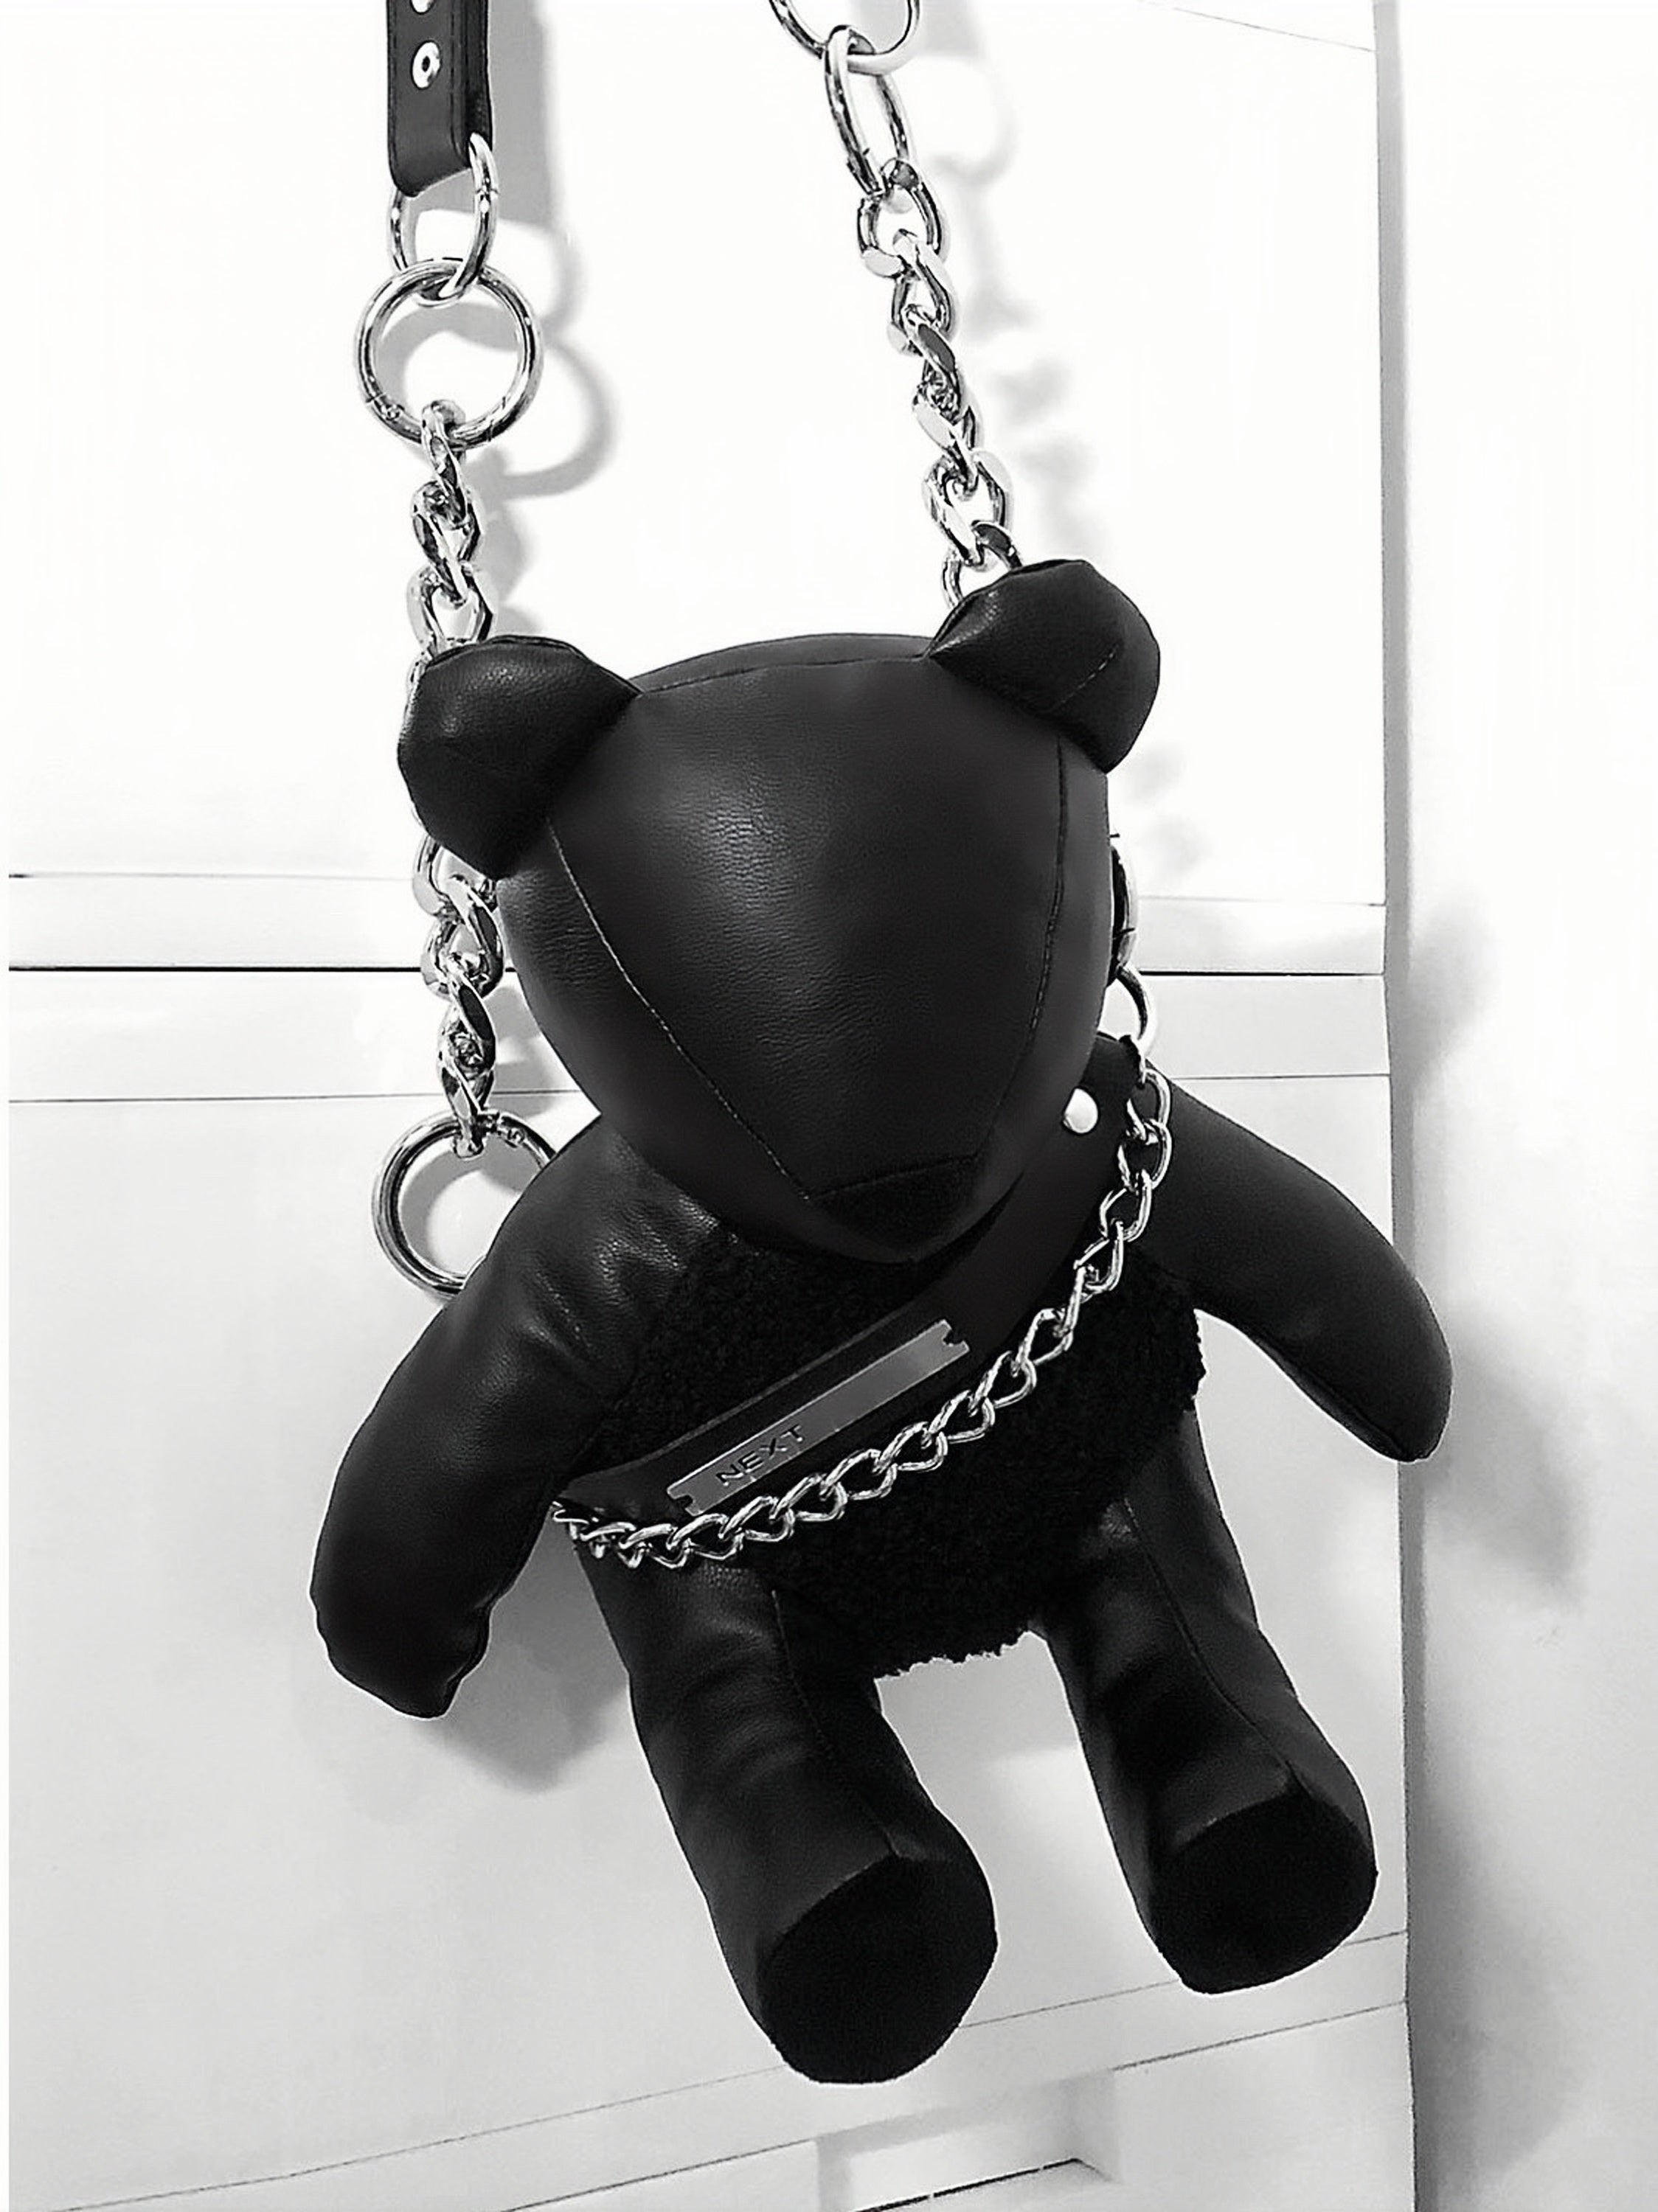 Black Bear Plush Toy-ntbhshop